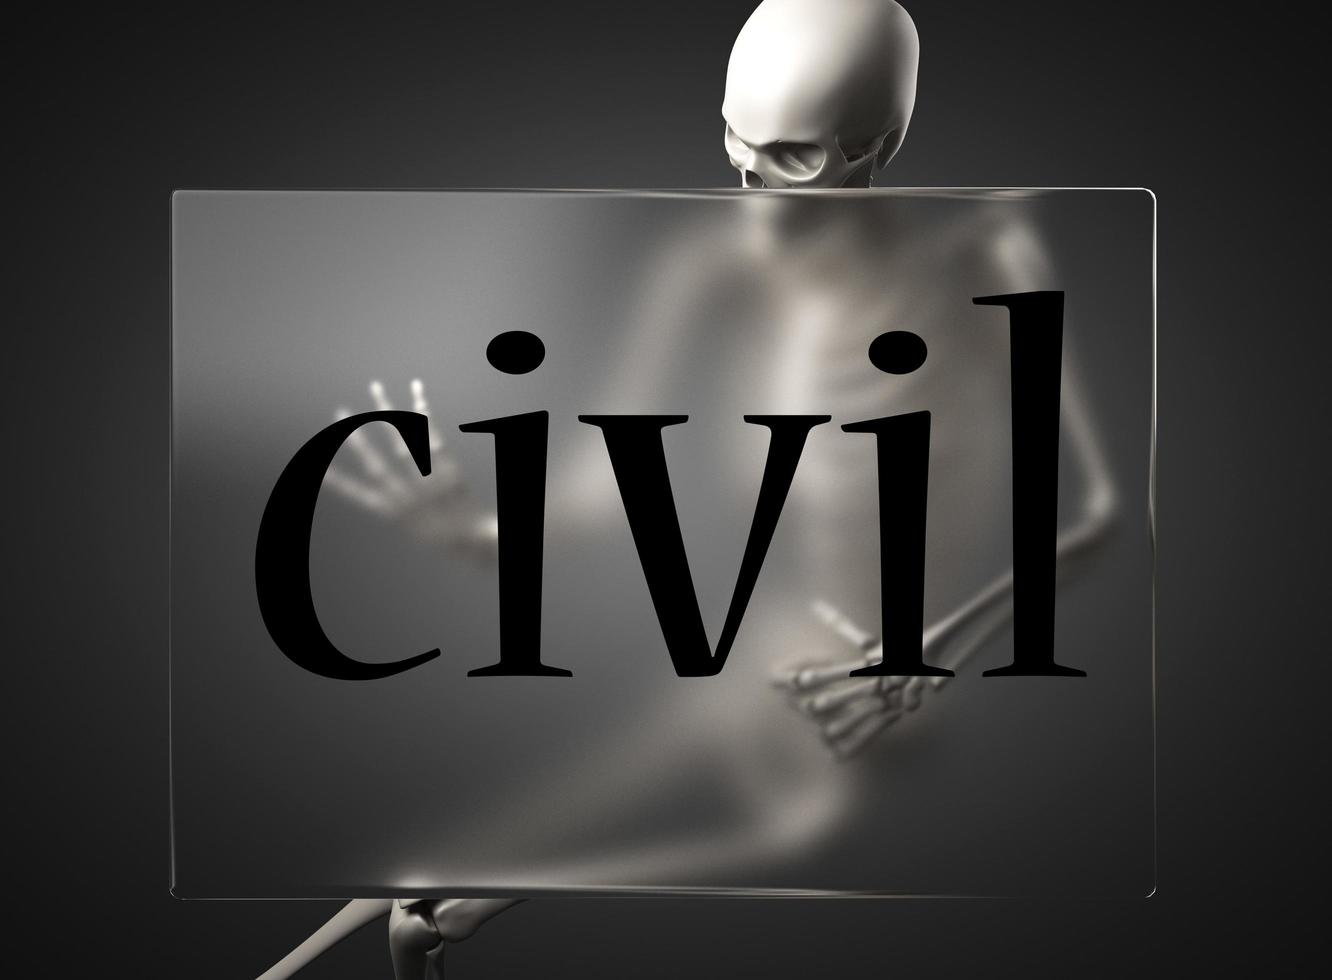 palabra civil sobre vidrio y esqueleto foto